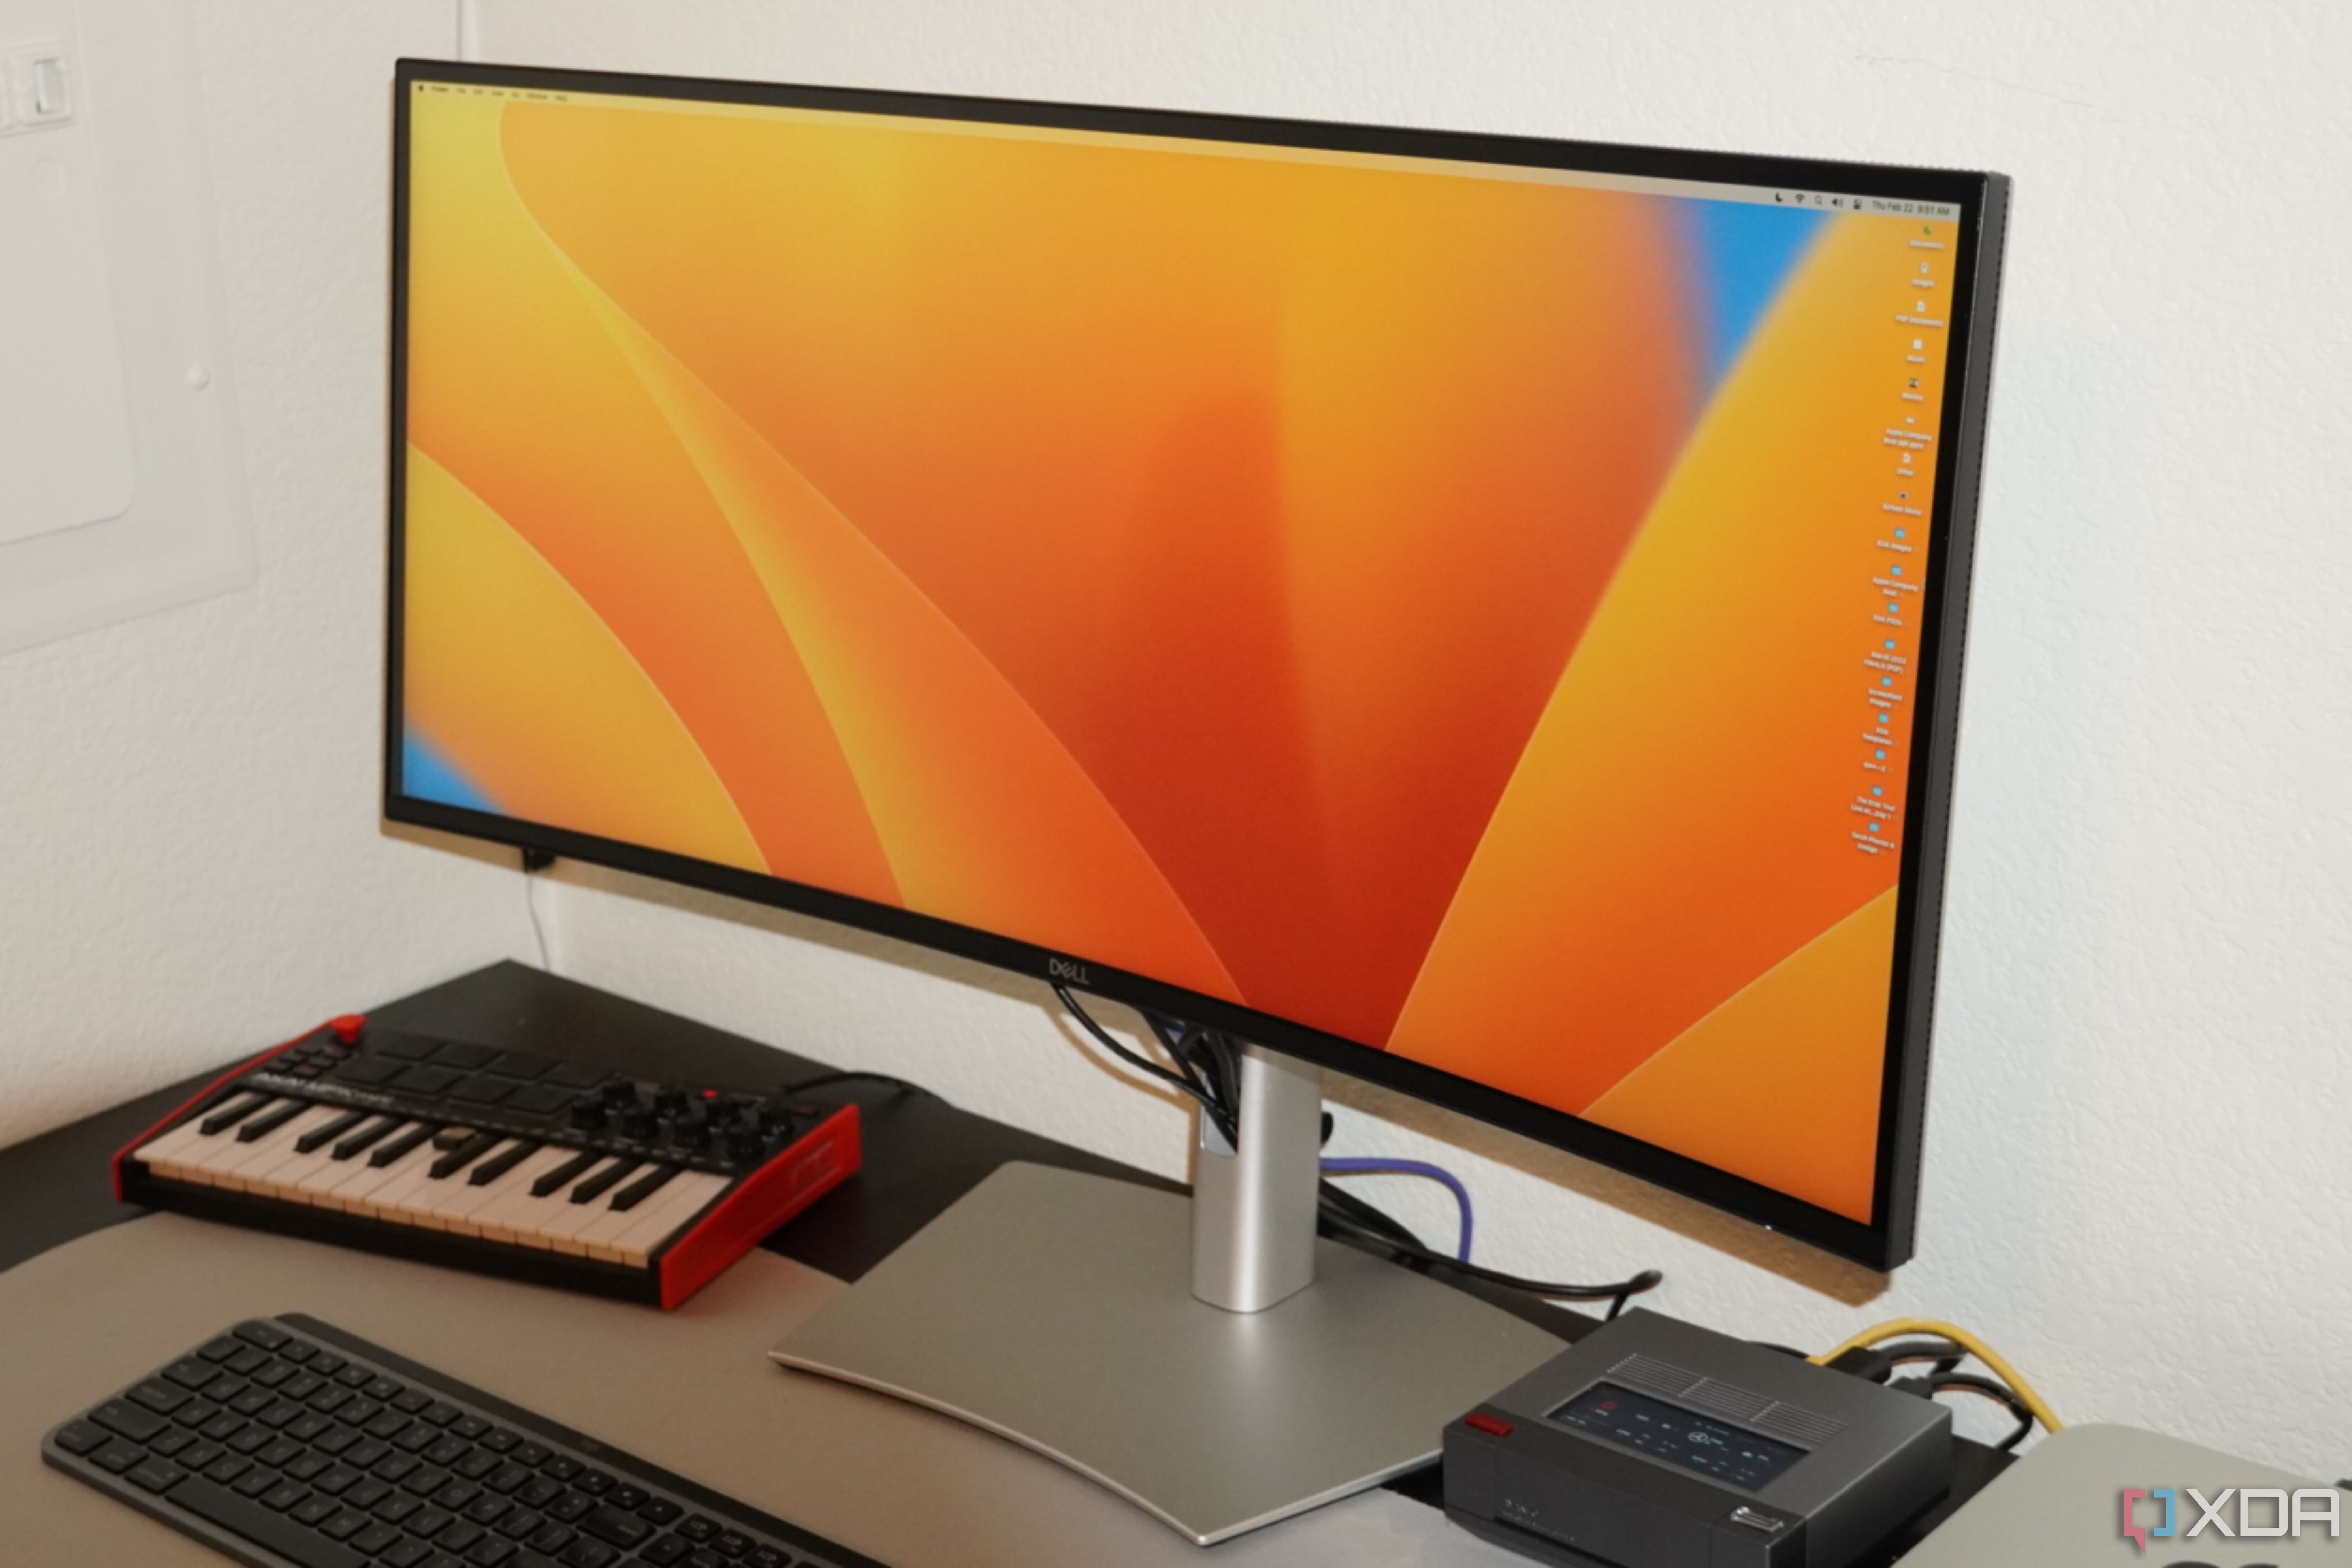 The macOS Home Screen on the Dell UltraSharp 34 Thunderbolt monitor.